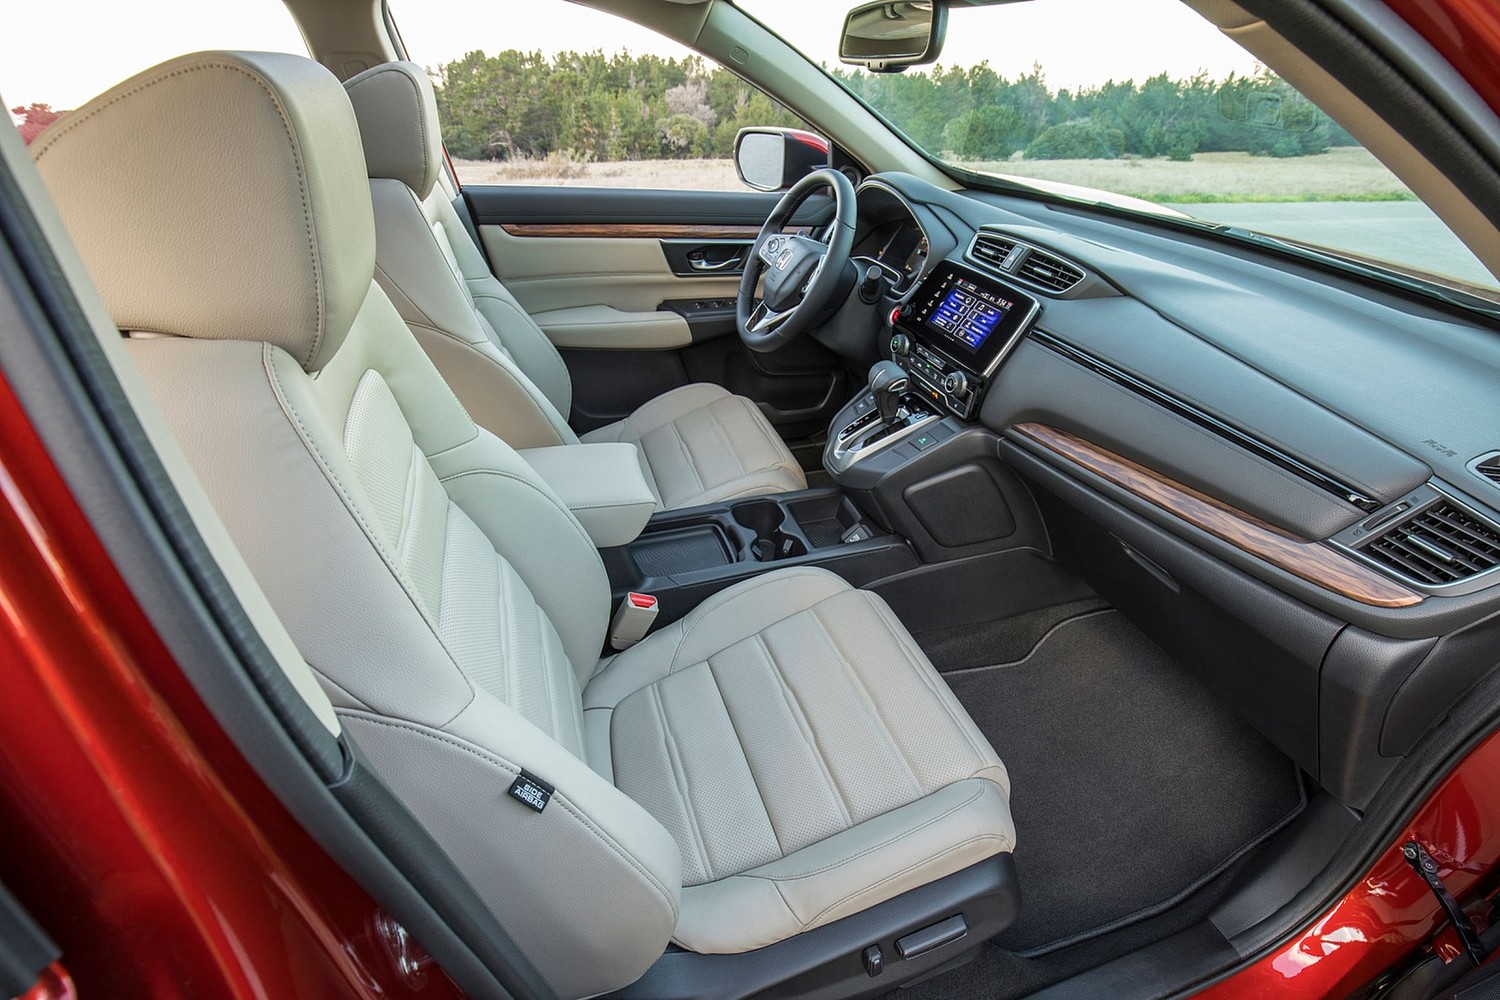 Honda CR-V Touring 4dr SUV Interior (2017 model year shown)